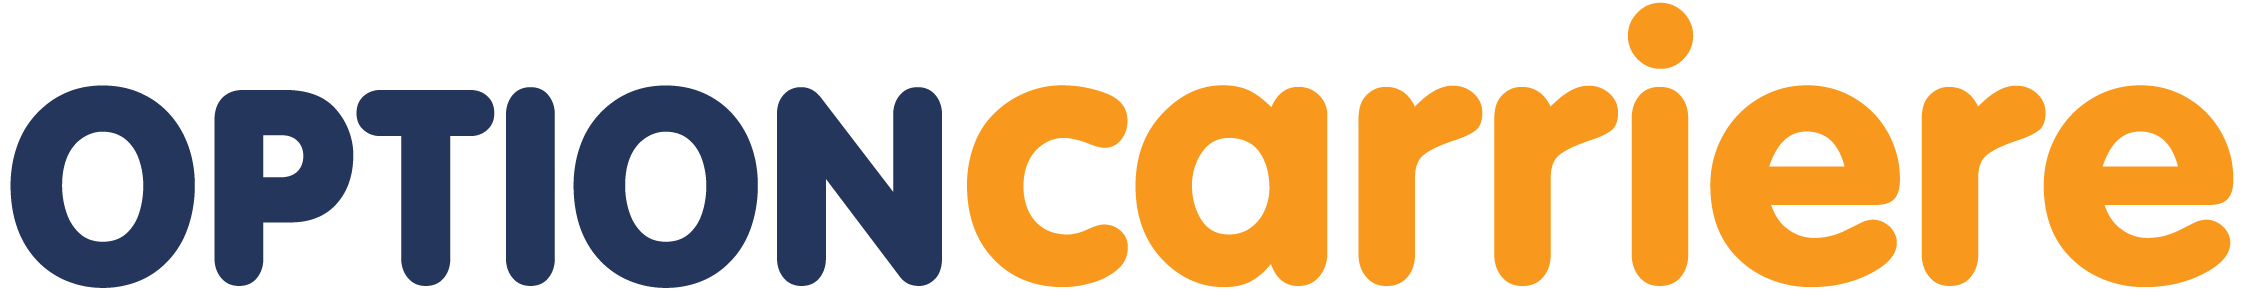 Optioncarriere logo